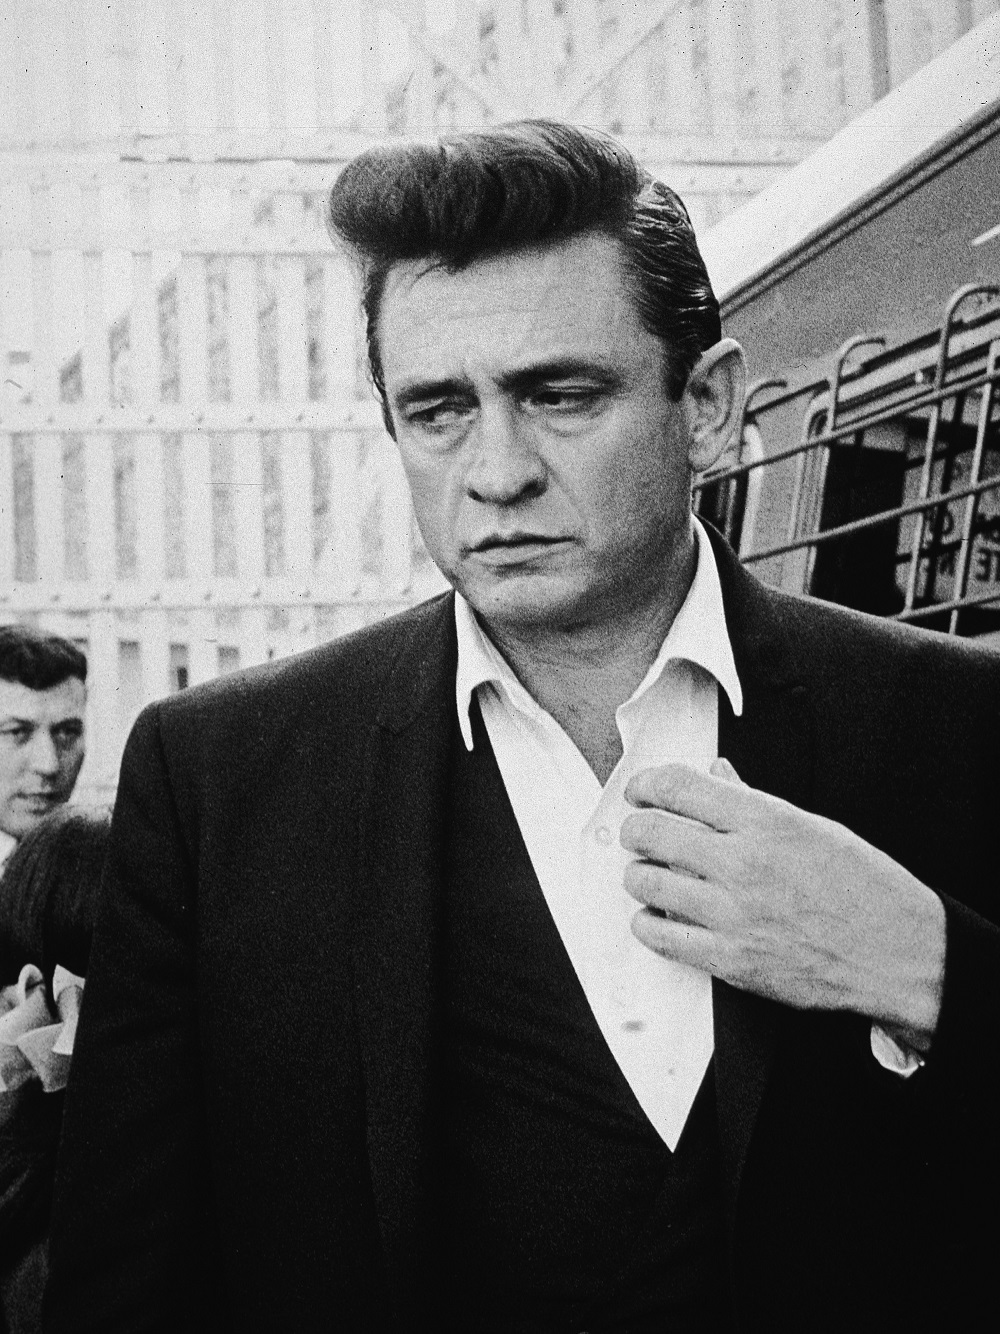 Johnny Cash outside Folsom Prison